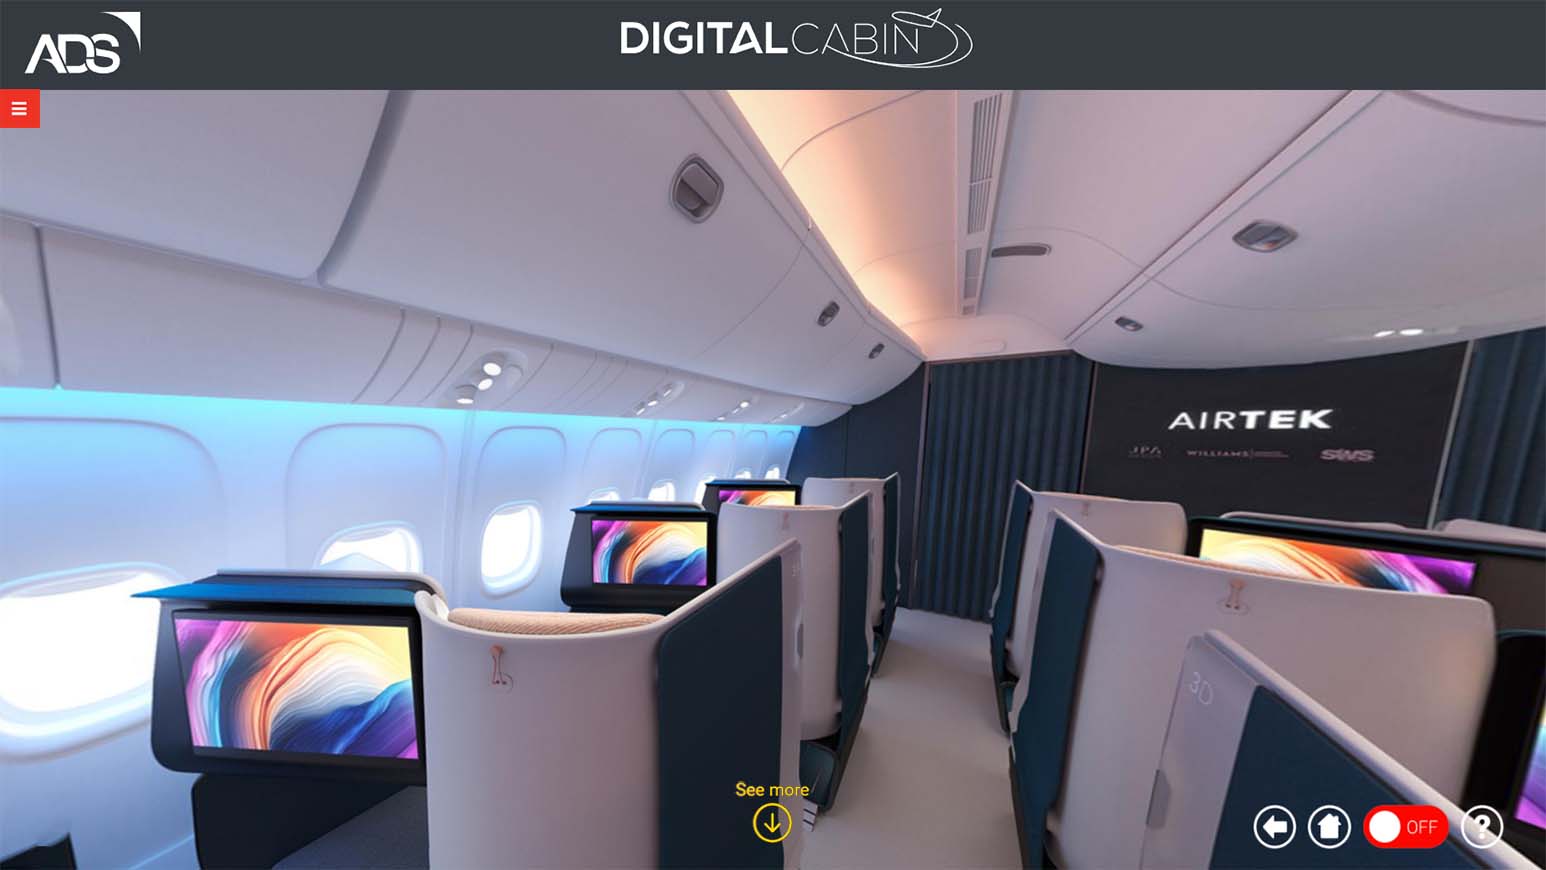 ADS Digital cabin 1546x870